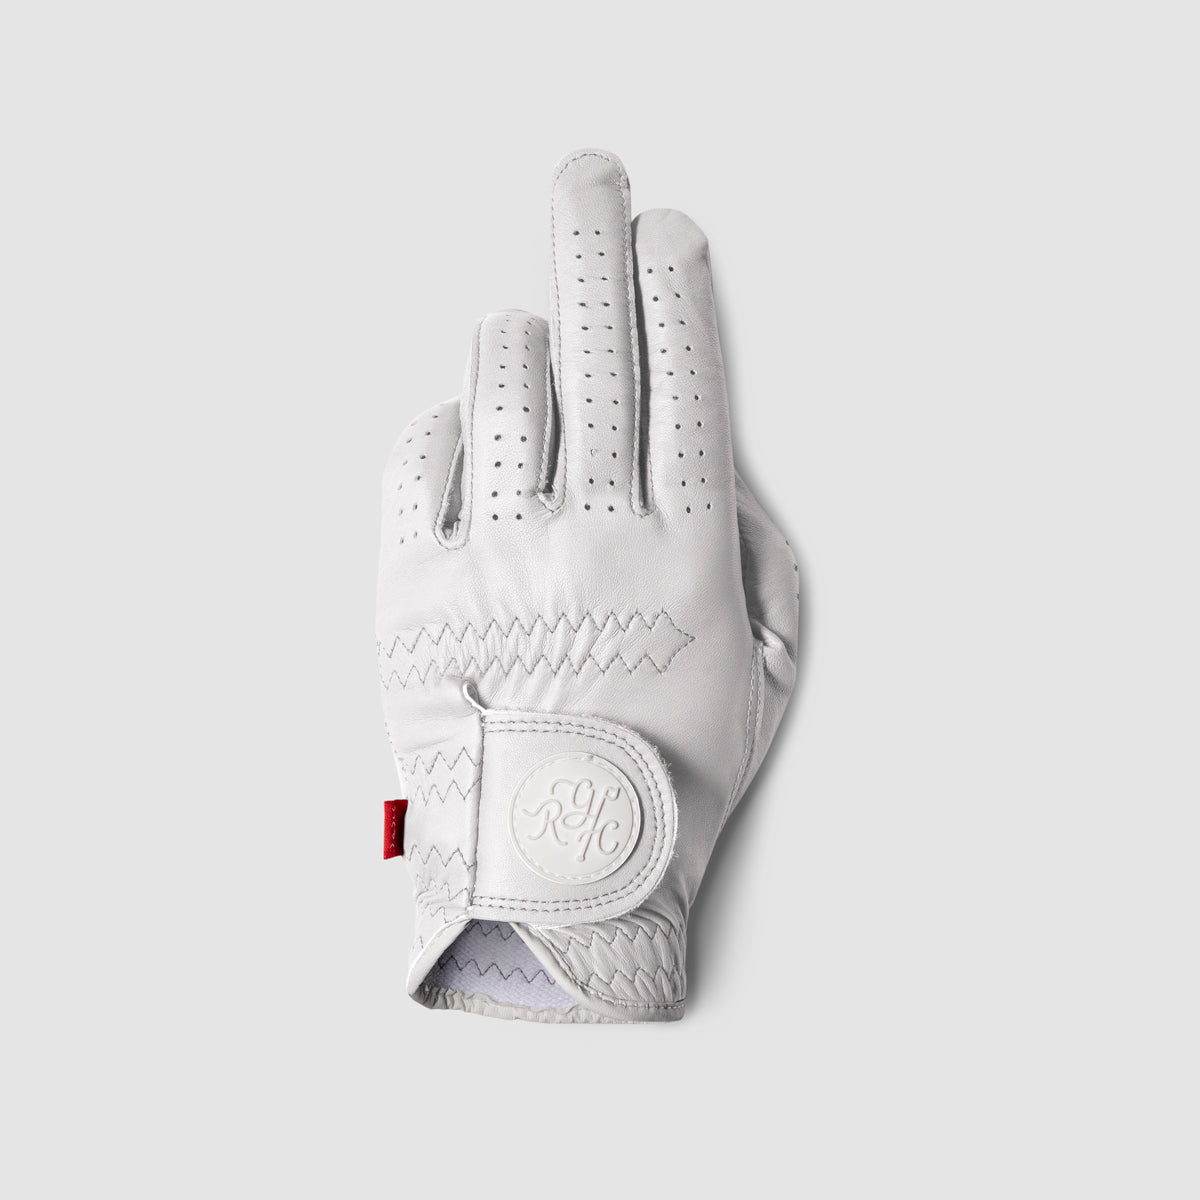 RGC CL-2 Golf Glove (White)